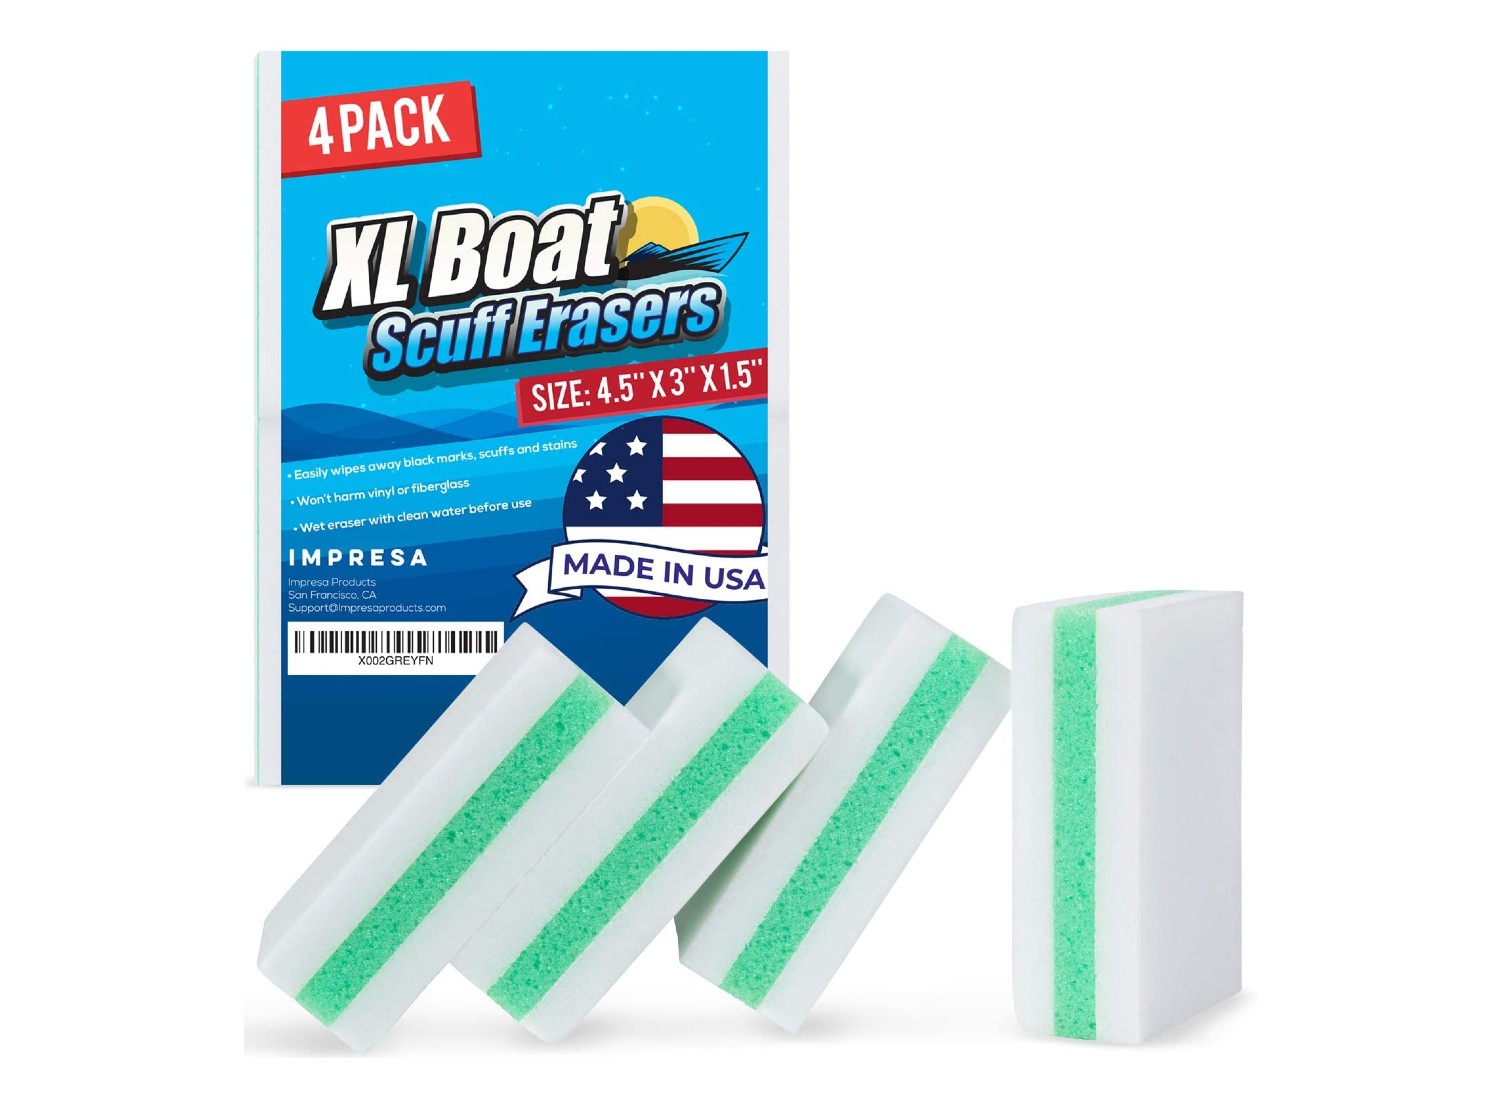 Boat Scuff Eraser reviews